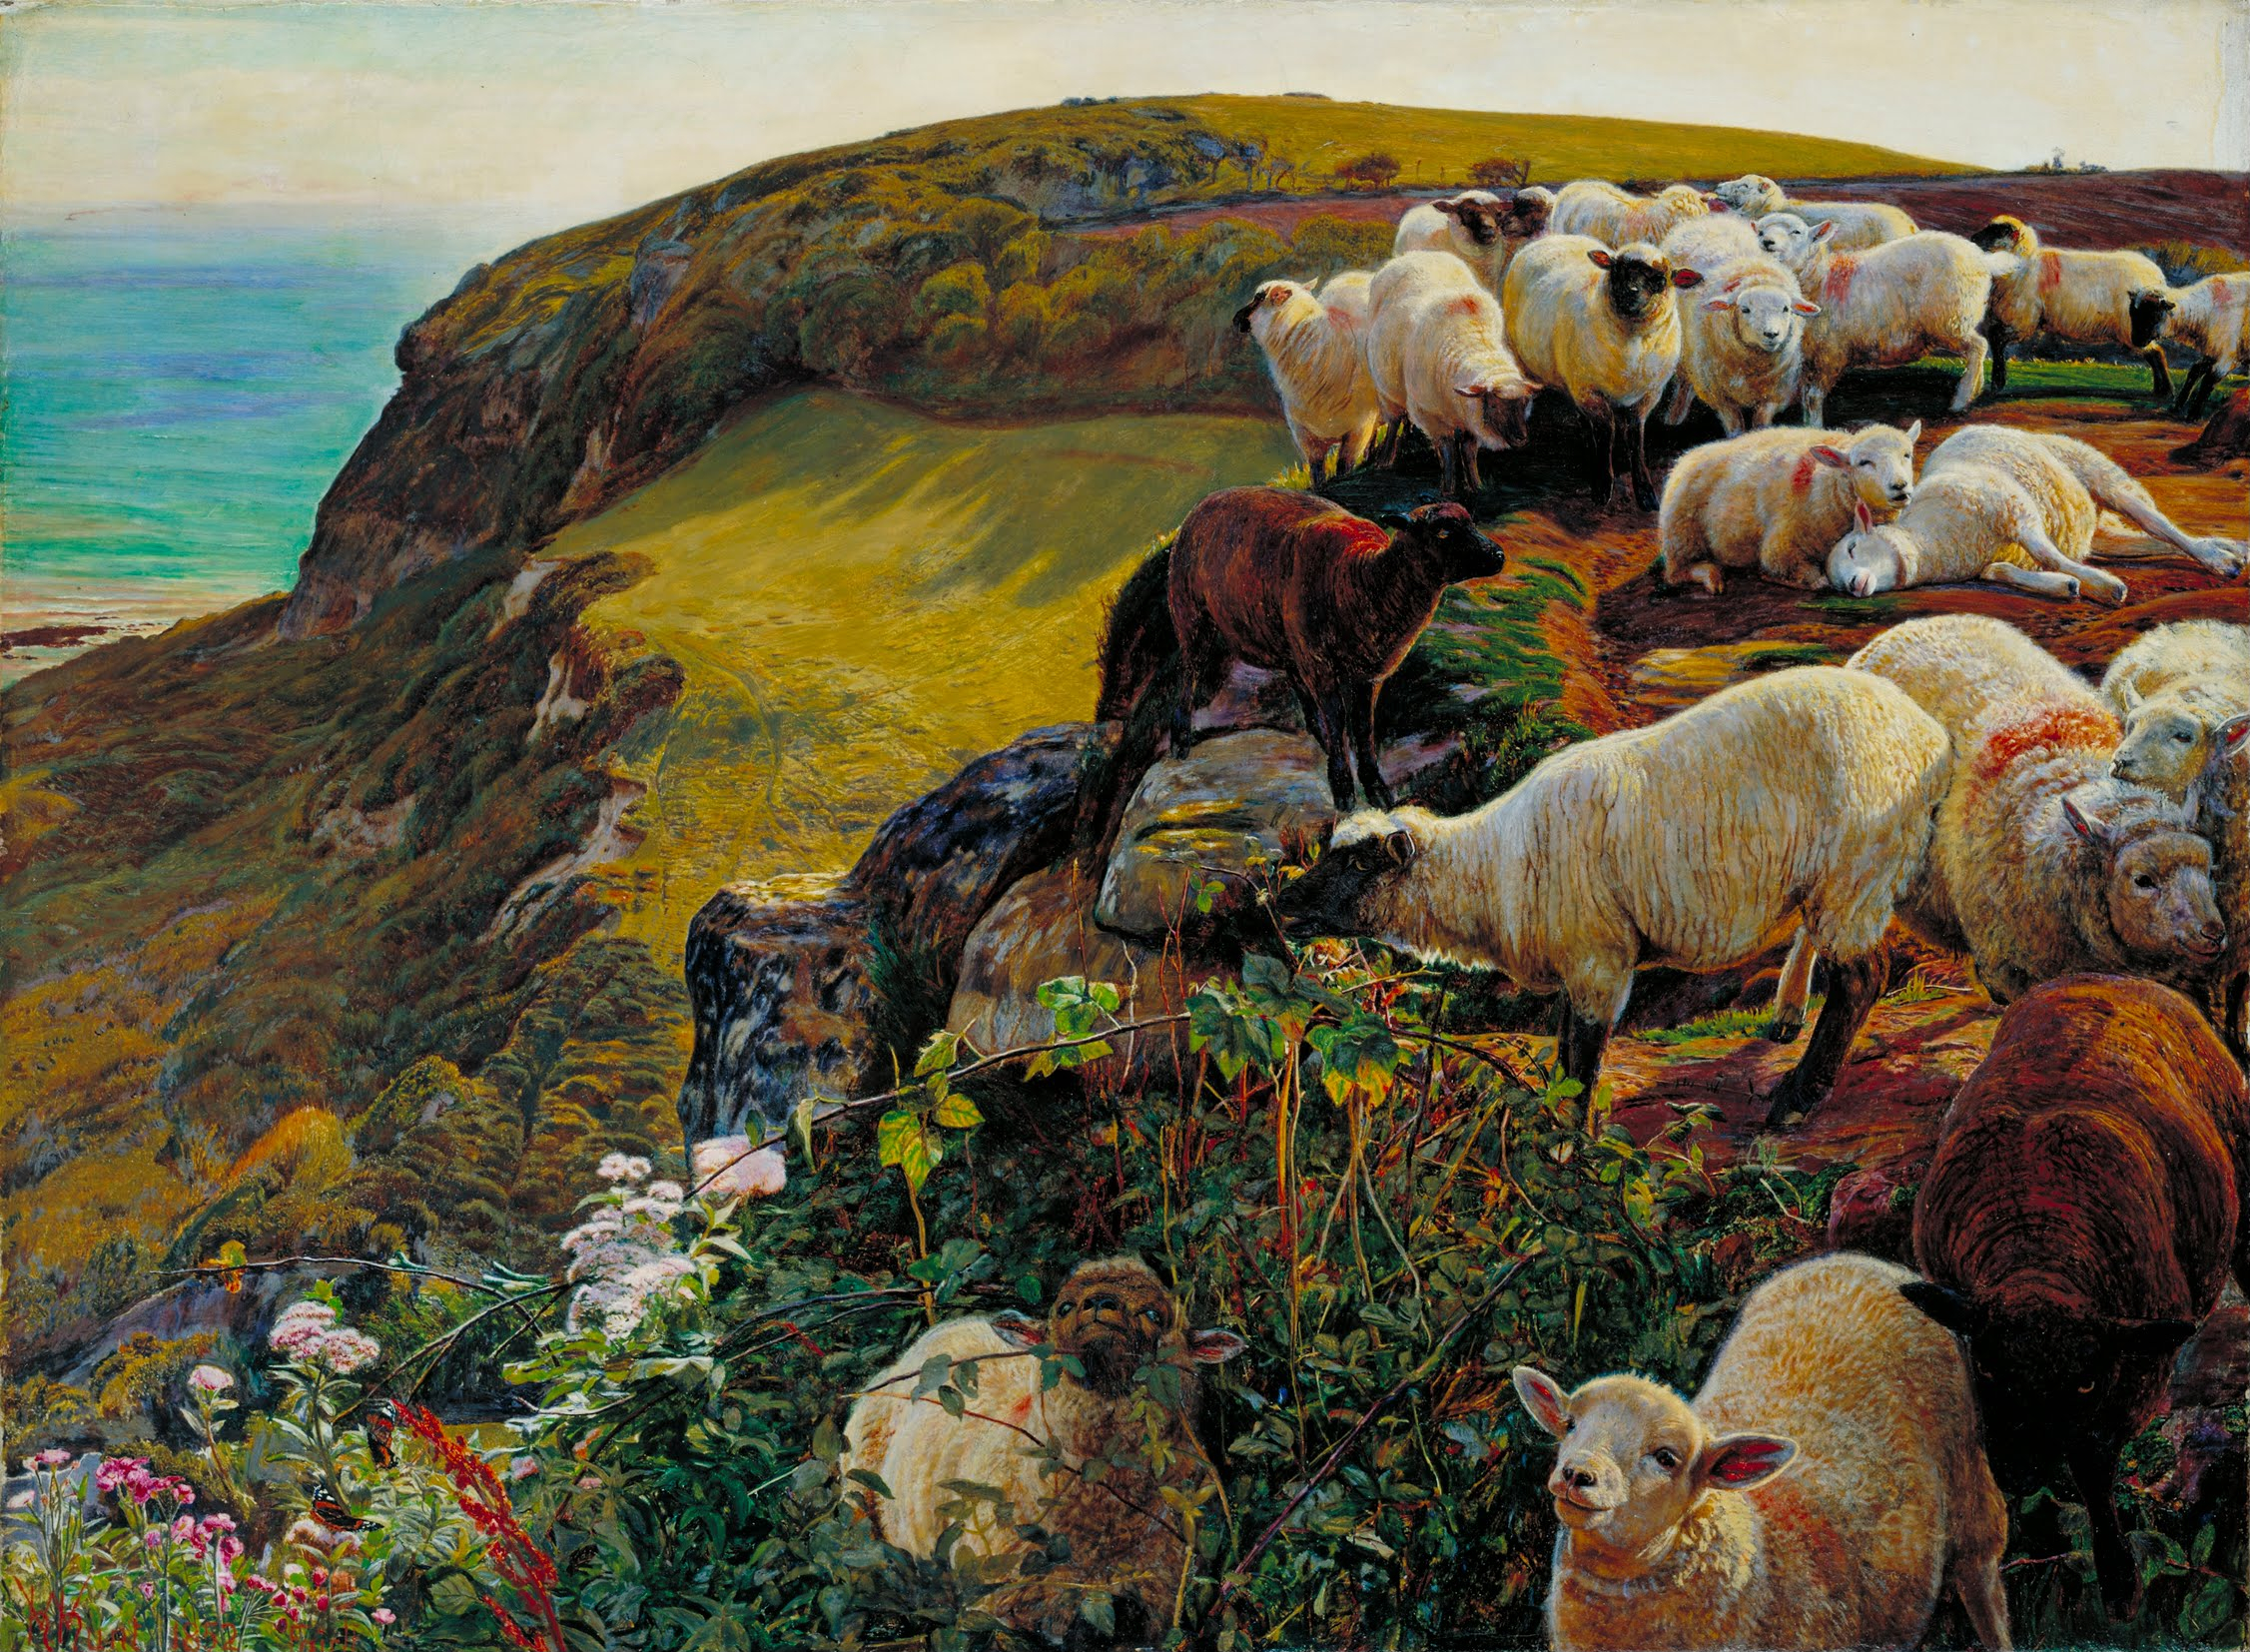 Наши английские побережья, 1852 («Заблудшие овечки») by William Holman Hunt - 1852 - 58,4 x 43,2 см 